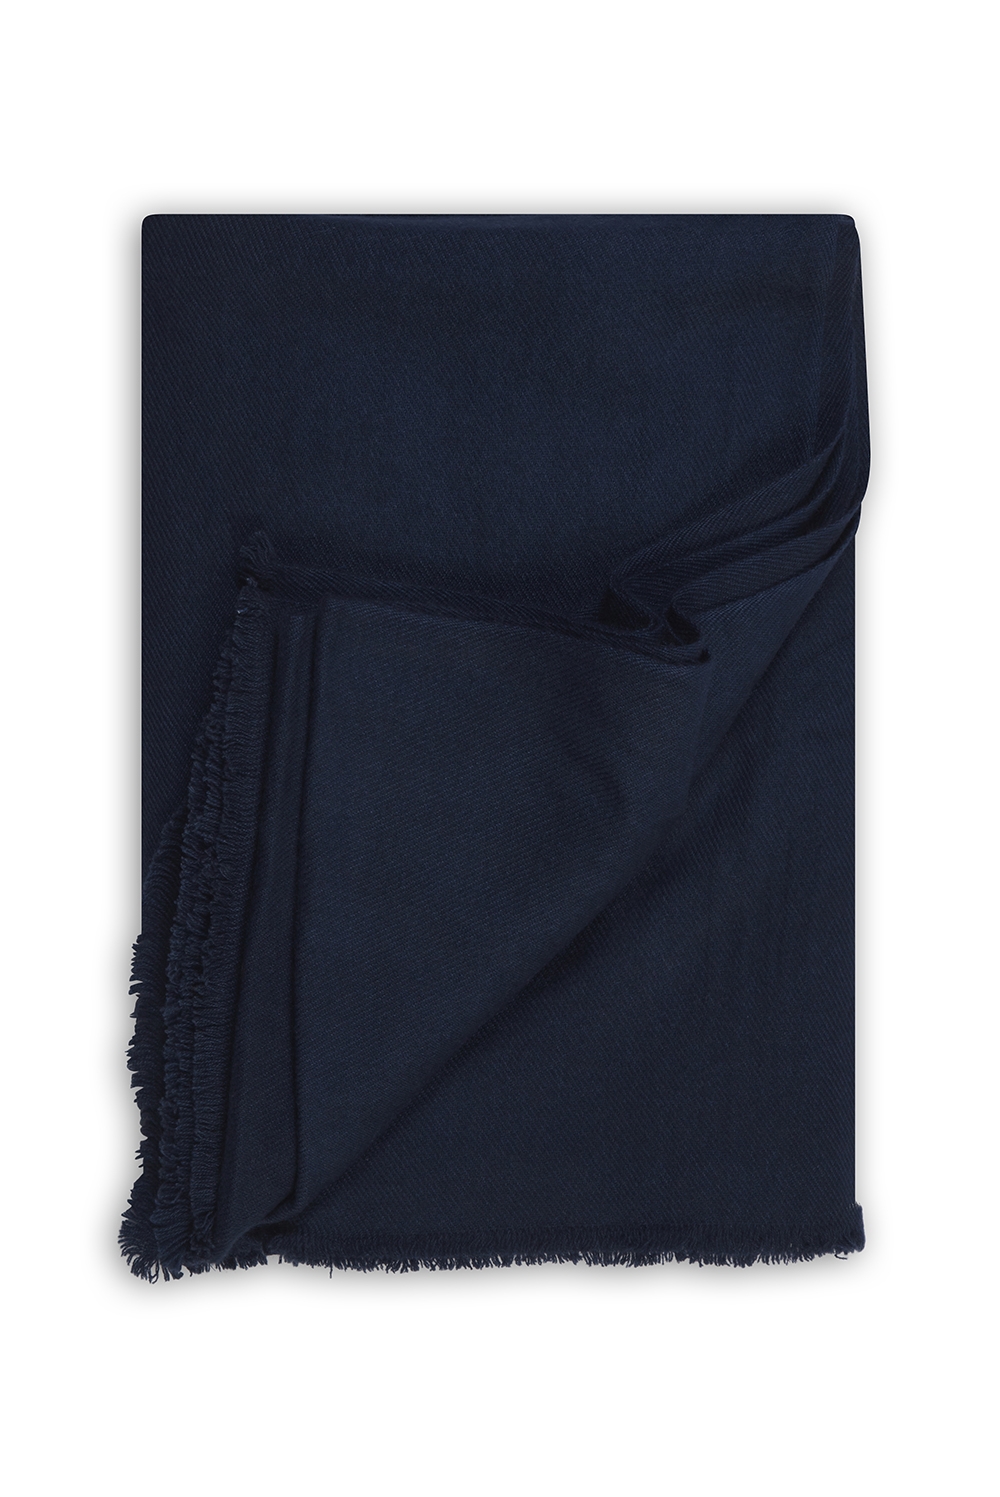 Cachemire accessoires homewear toodoo plain l 220 x 220 bleu marine 220x220cm